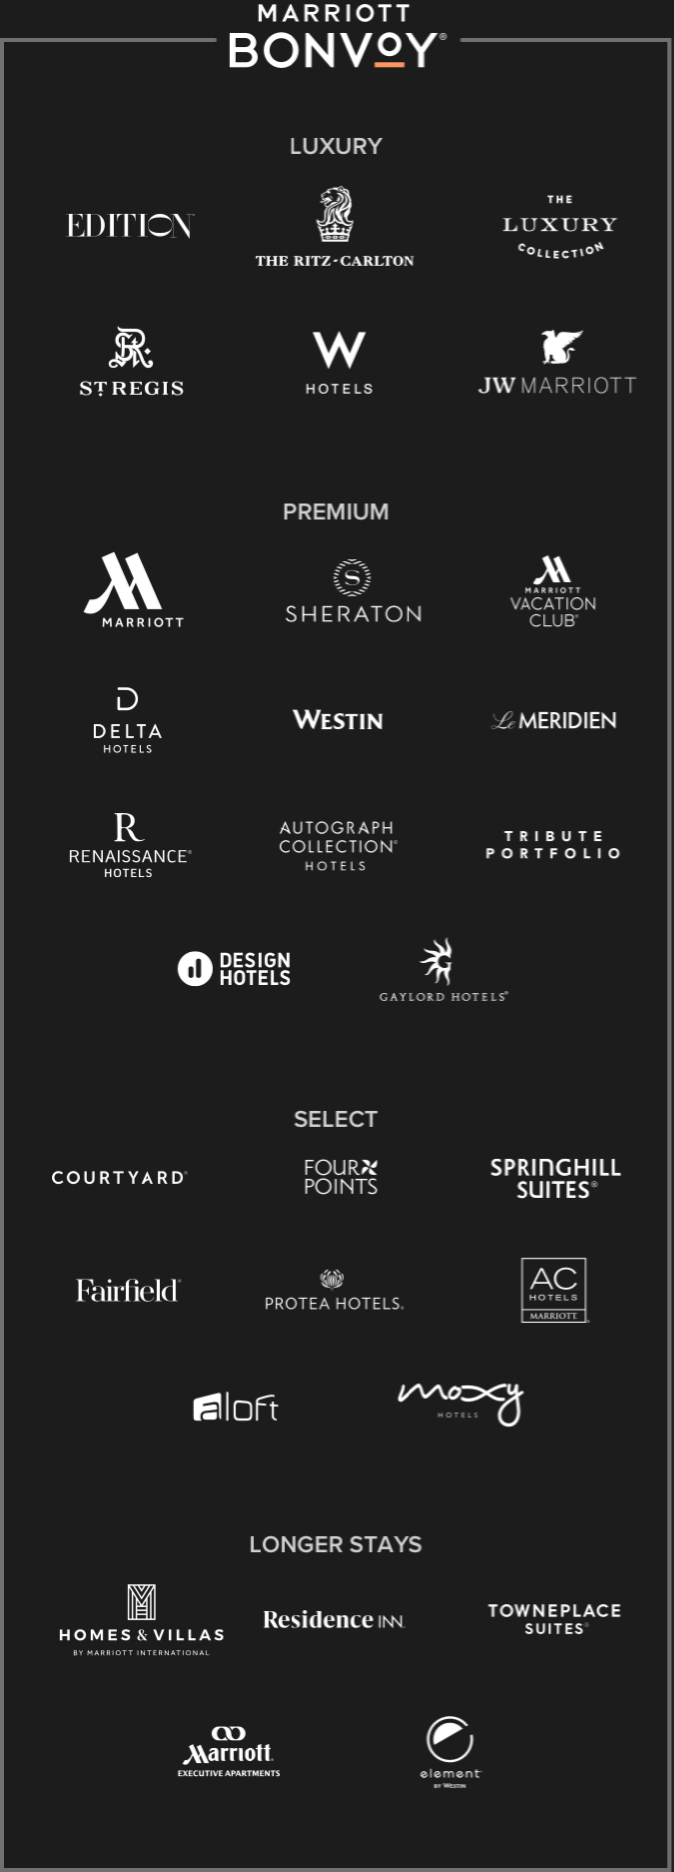 Marriott Bonvoy (registered trademark) logo. List of hotels: LUXURY – Edition (registered trademark). The Ritz-Carlton. The Luxury Collection. St. Regis. W Hotels. JW Marriott. PREMIUM – Marriott. Sheraton. Marriott Vacation Club (registered trademark). Delta Hotels. Westin. Le Meridien. Renaissance (registered trademark) Hotels. Autograph Collection (registered trademark) Hotels. Tribute Portfolio. Design Hotels. Gaylord Hotels (registered trademark). SELECT – Courtyard (registered trademark). Four Points. Springhill Suites (registered trademark). Fairfield (registered trademark). Protea Hotels (registered trademark). AC Hotels (registered trademark) Marriott. Aloft. Moxy Hotels. LONGER STAYS –  Home & Villas by Marriott International. Residence Inn (registered trademark). Towneplace Suites (registered trademark). Marriott (registered trademark) Executive Apartments. Element.